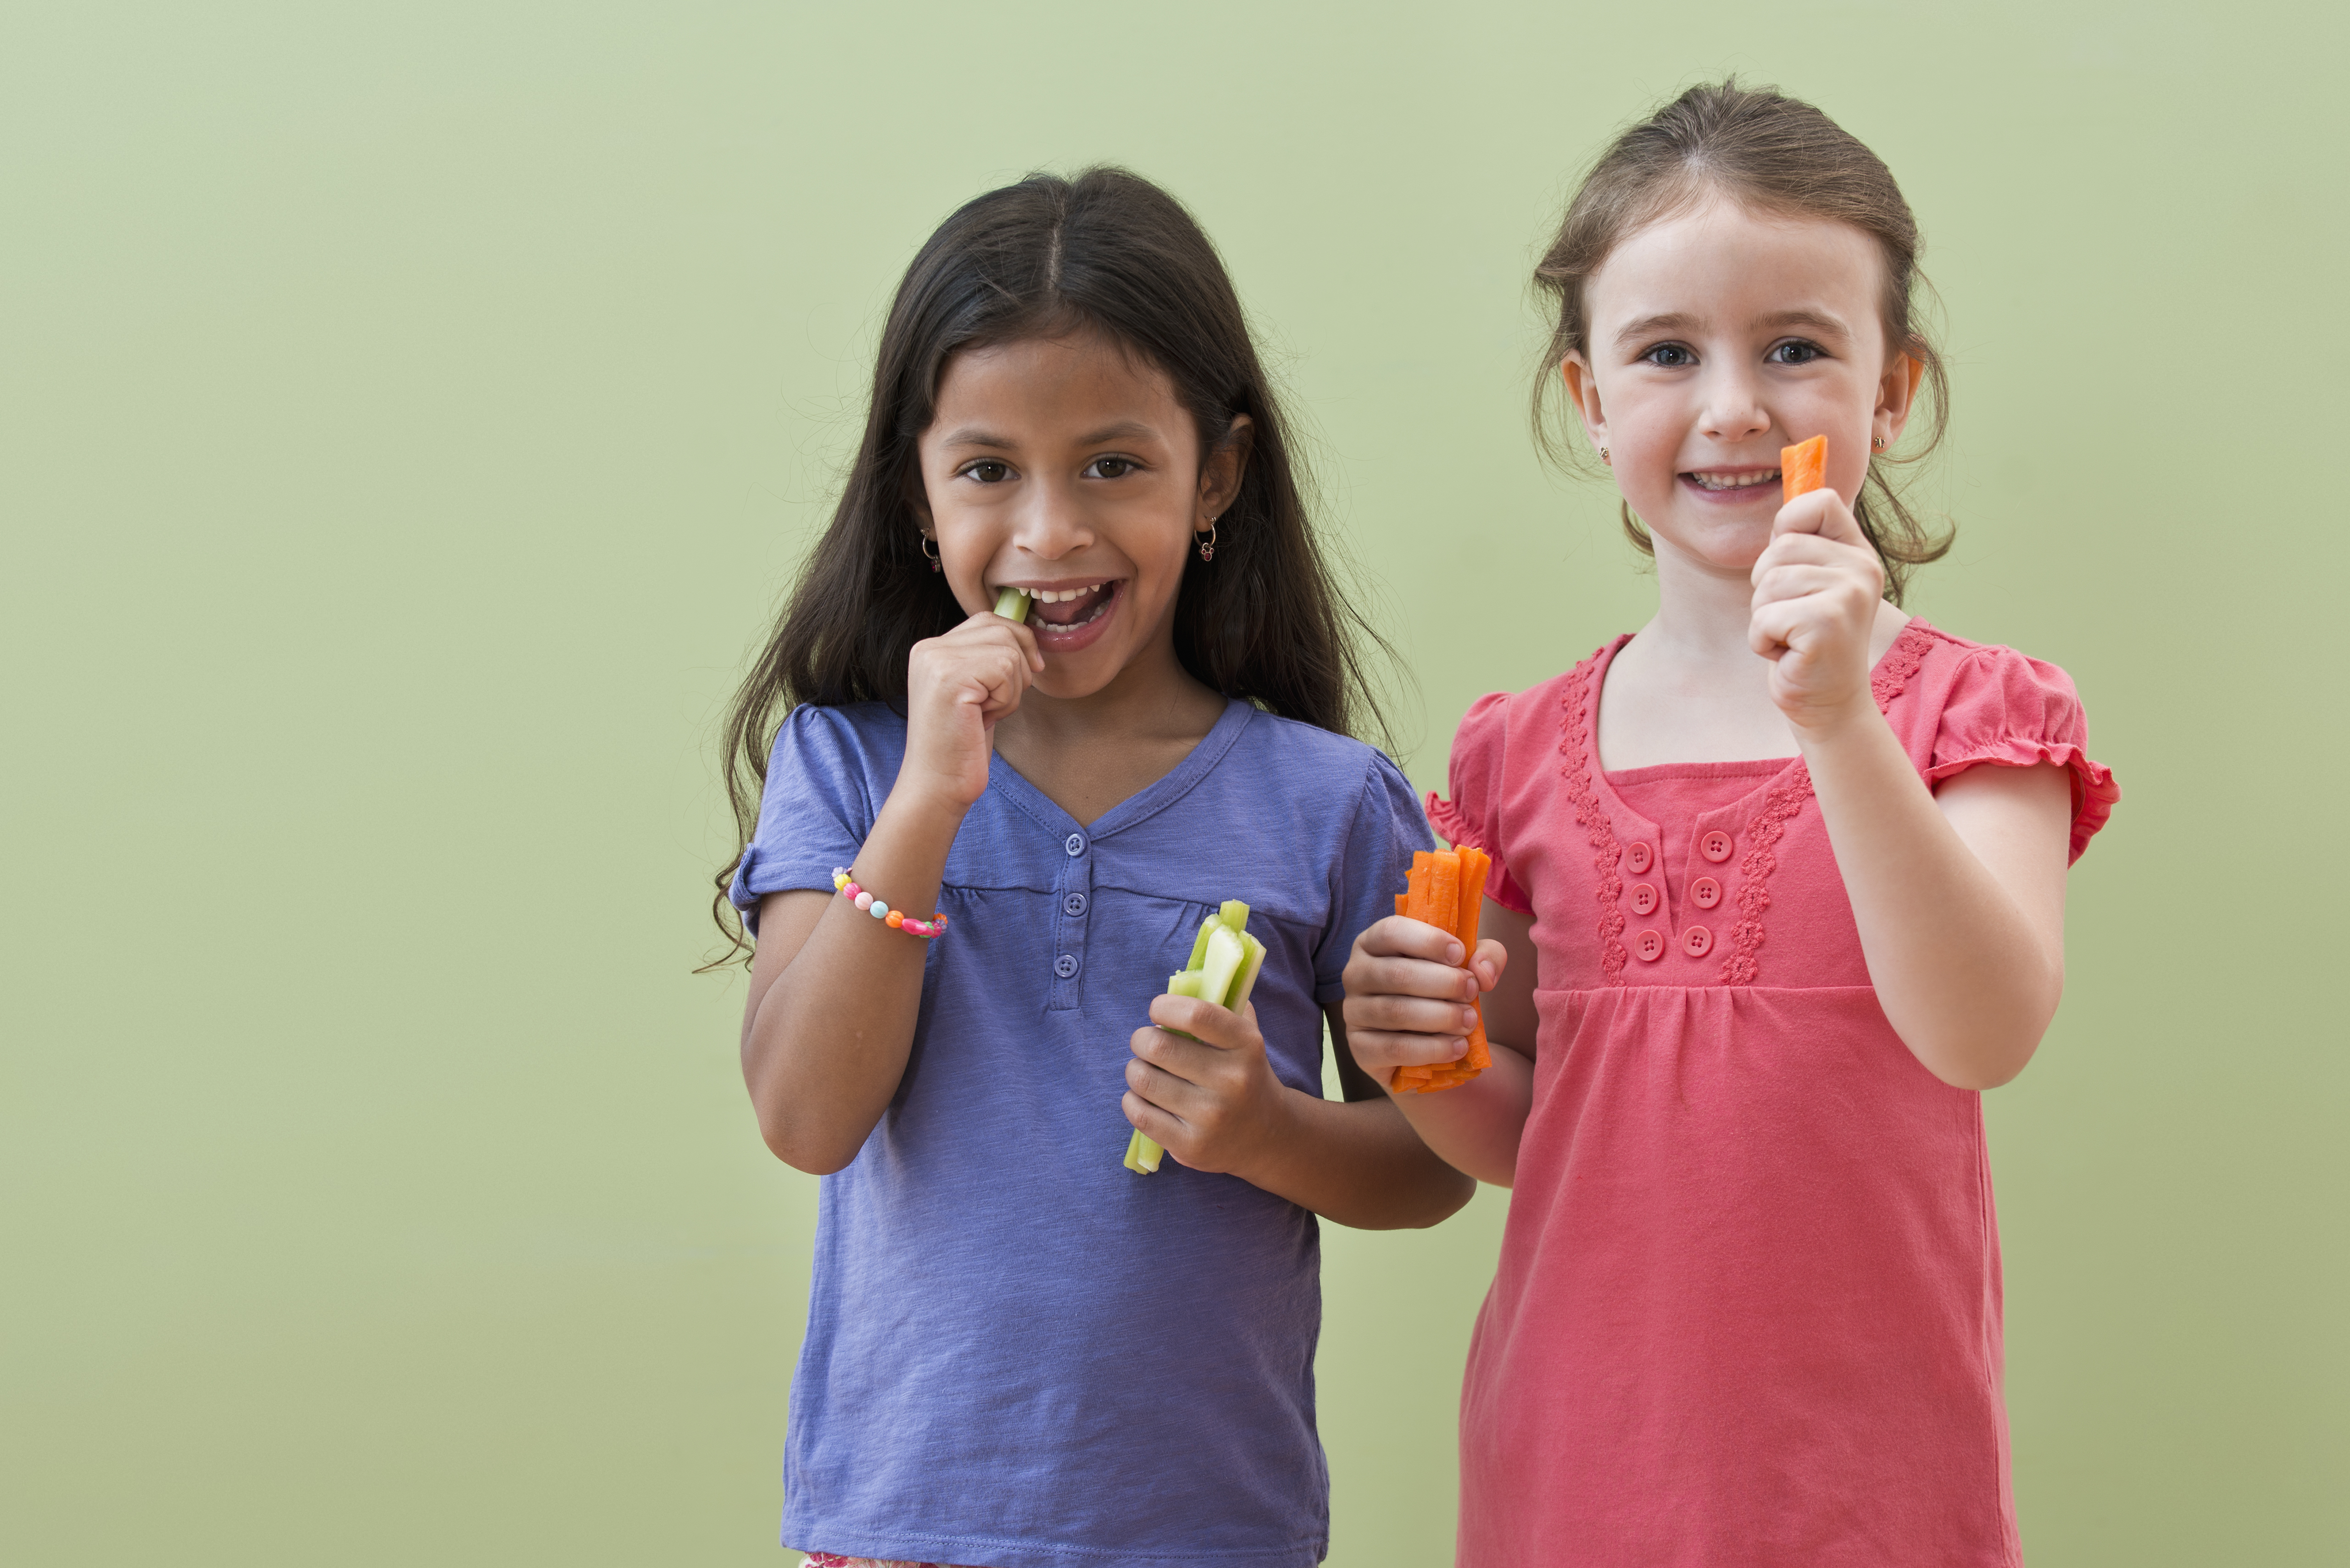 Girls eating vegetable sticks together | Source: Getty Images